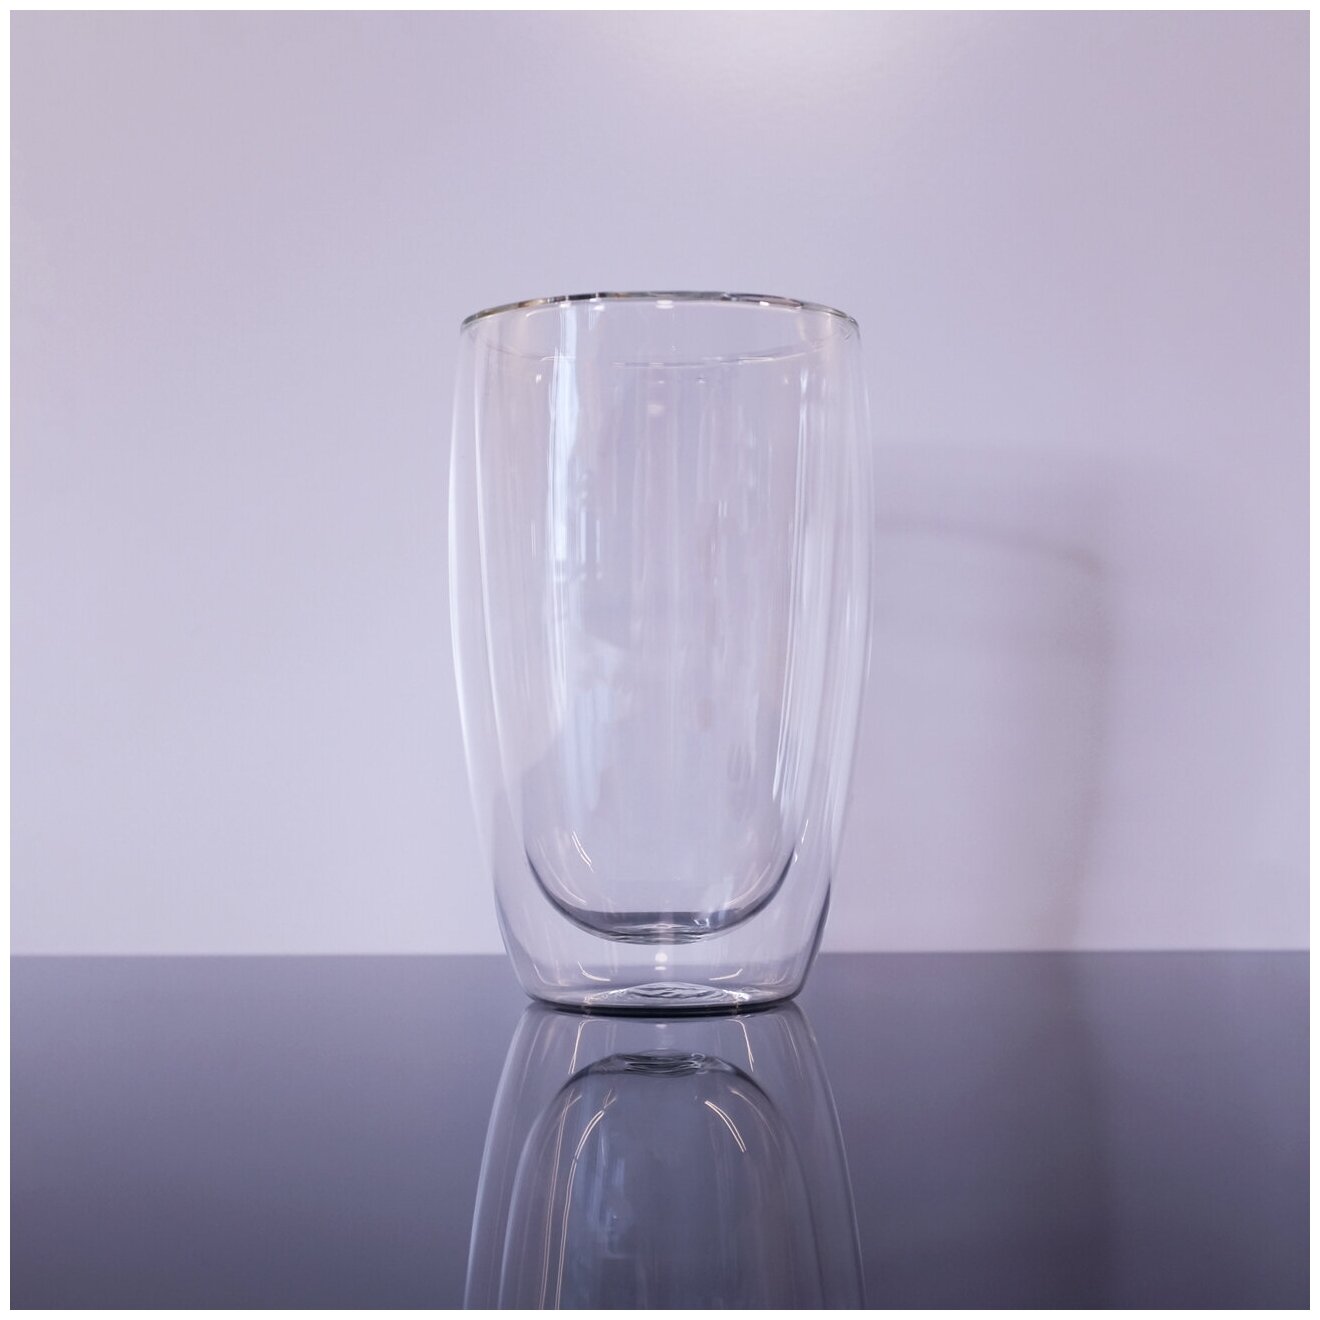 Термо стакан ЛiСТ 450 мл 1шт, стеклянный с двойными стенками, термостакан, термокружка (LIS50178)